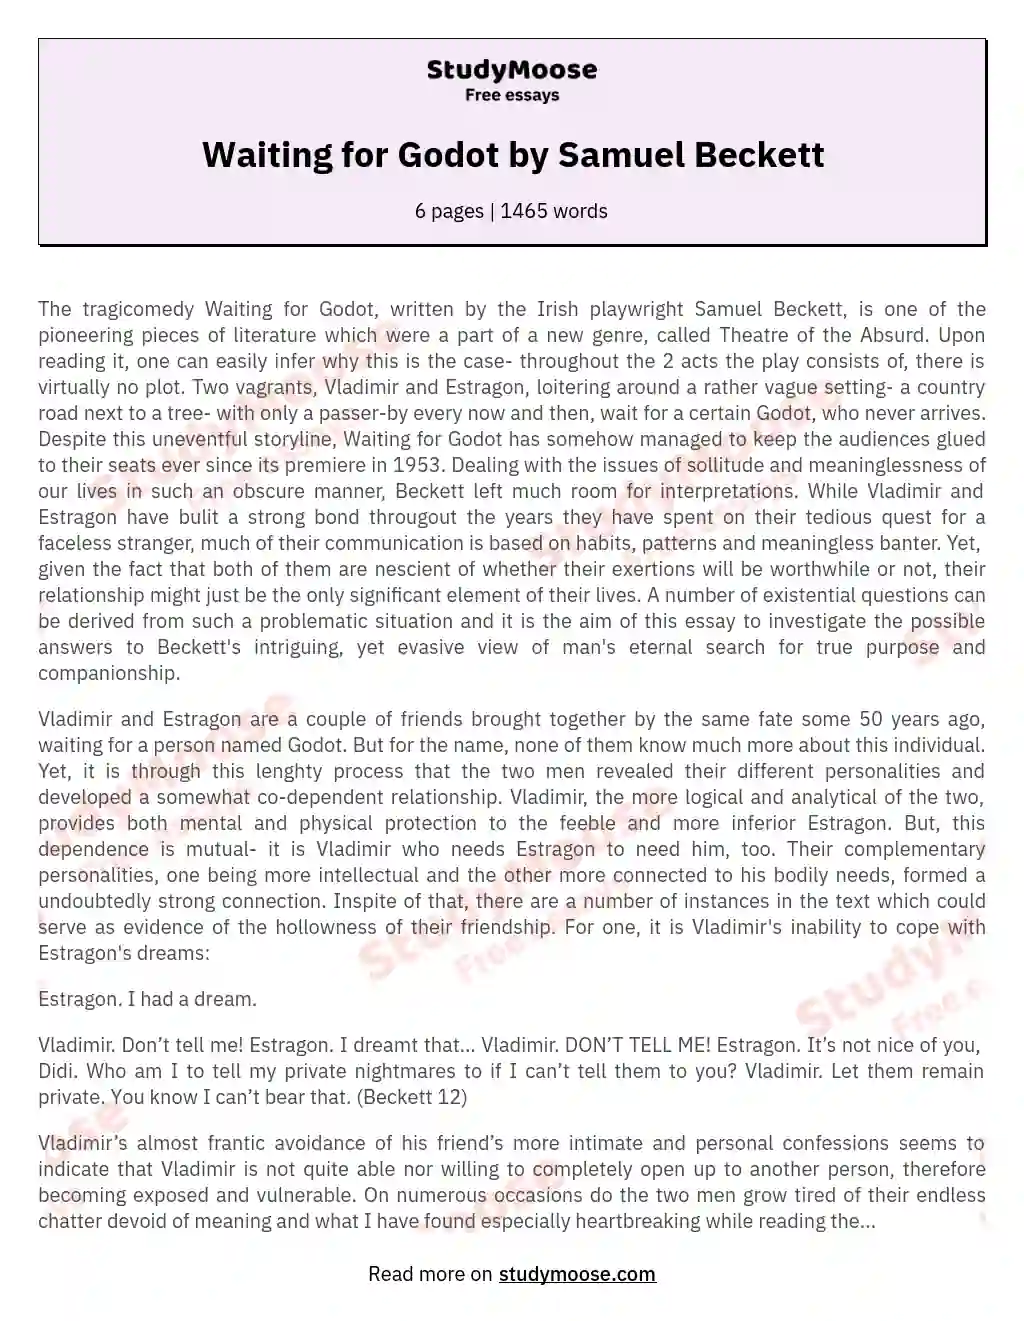 Waiting for Godot by Samuel Beckett essay